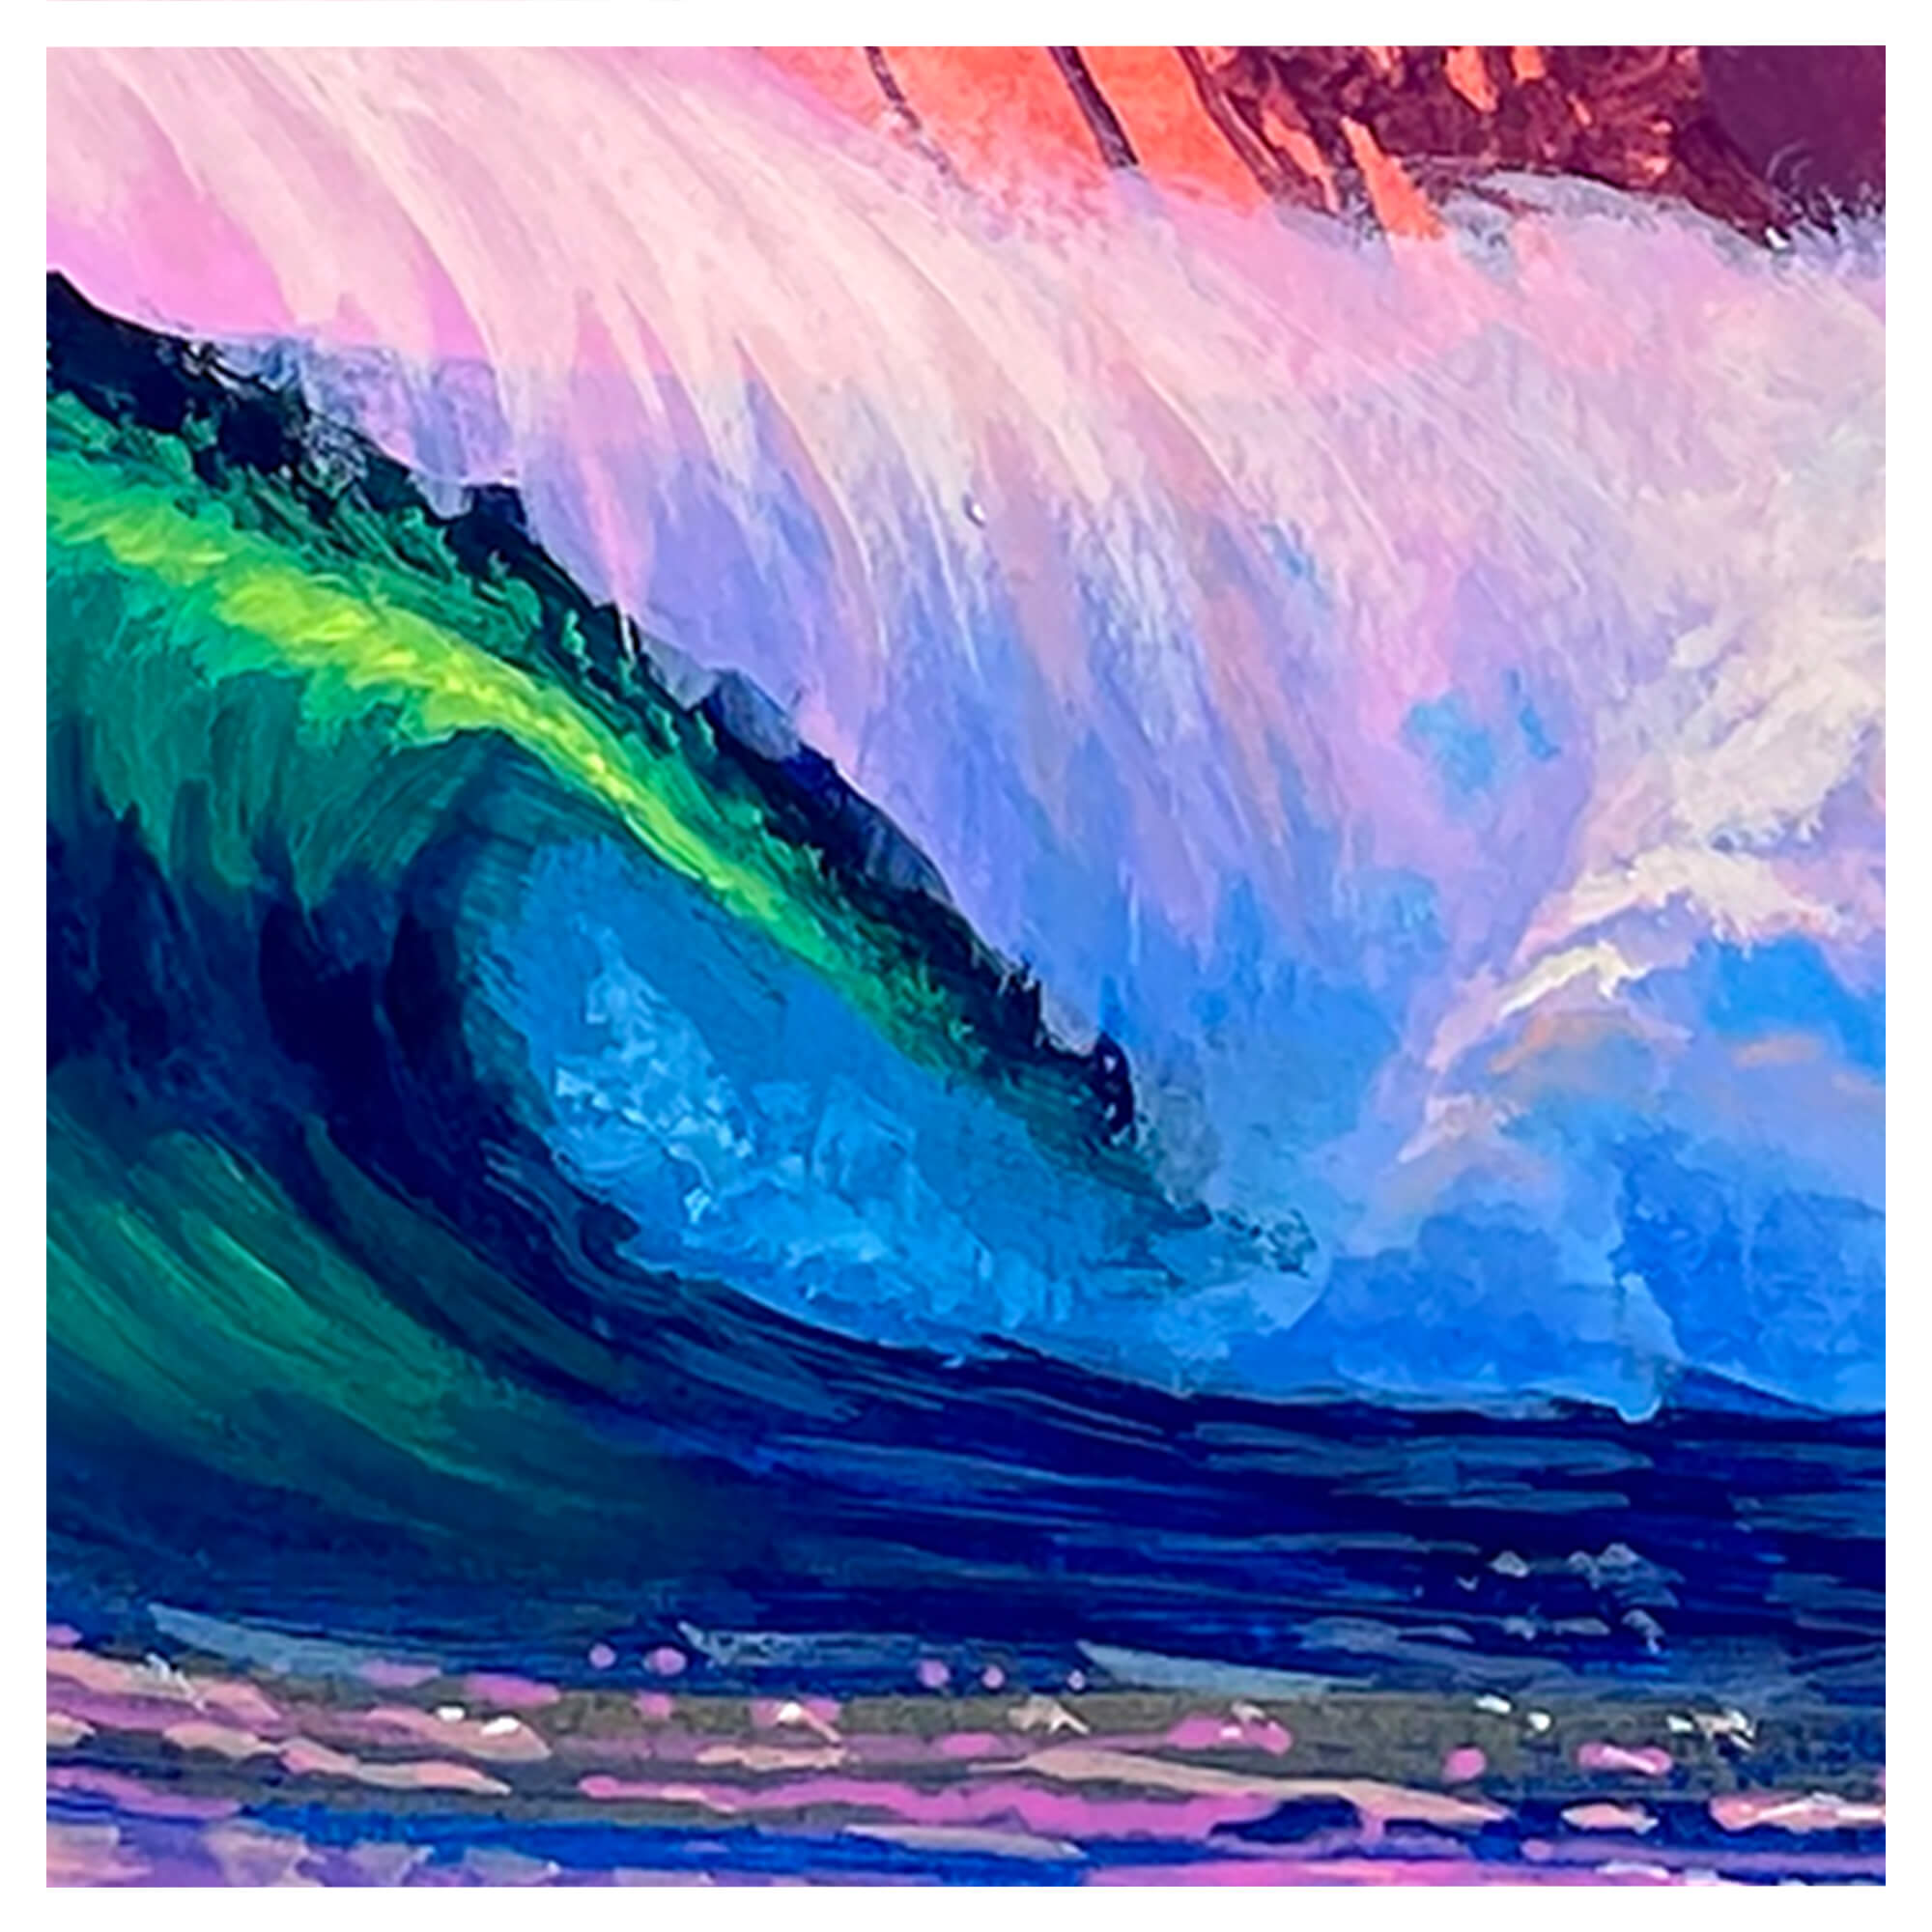 Crashing wave art by Hawaii artist Patrick Parker